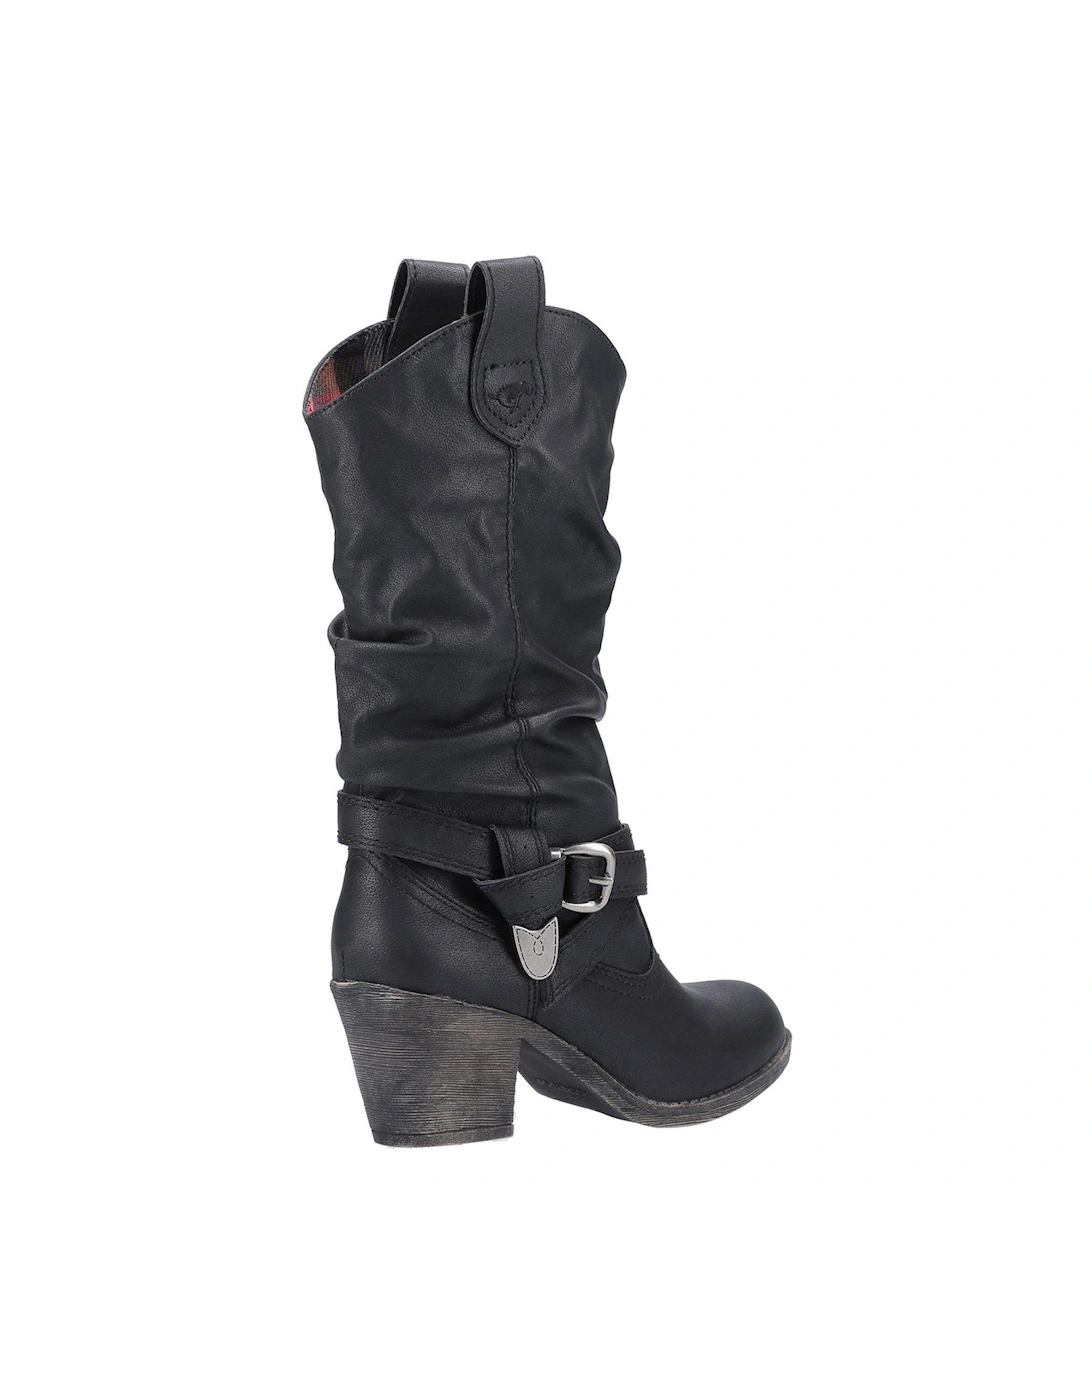 Sidestep Knee High Boots - Black